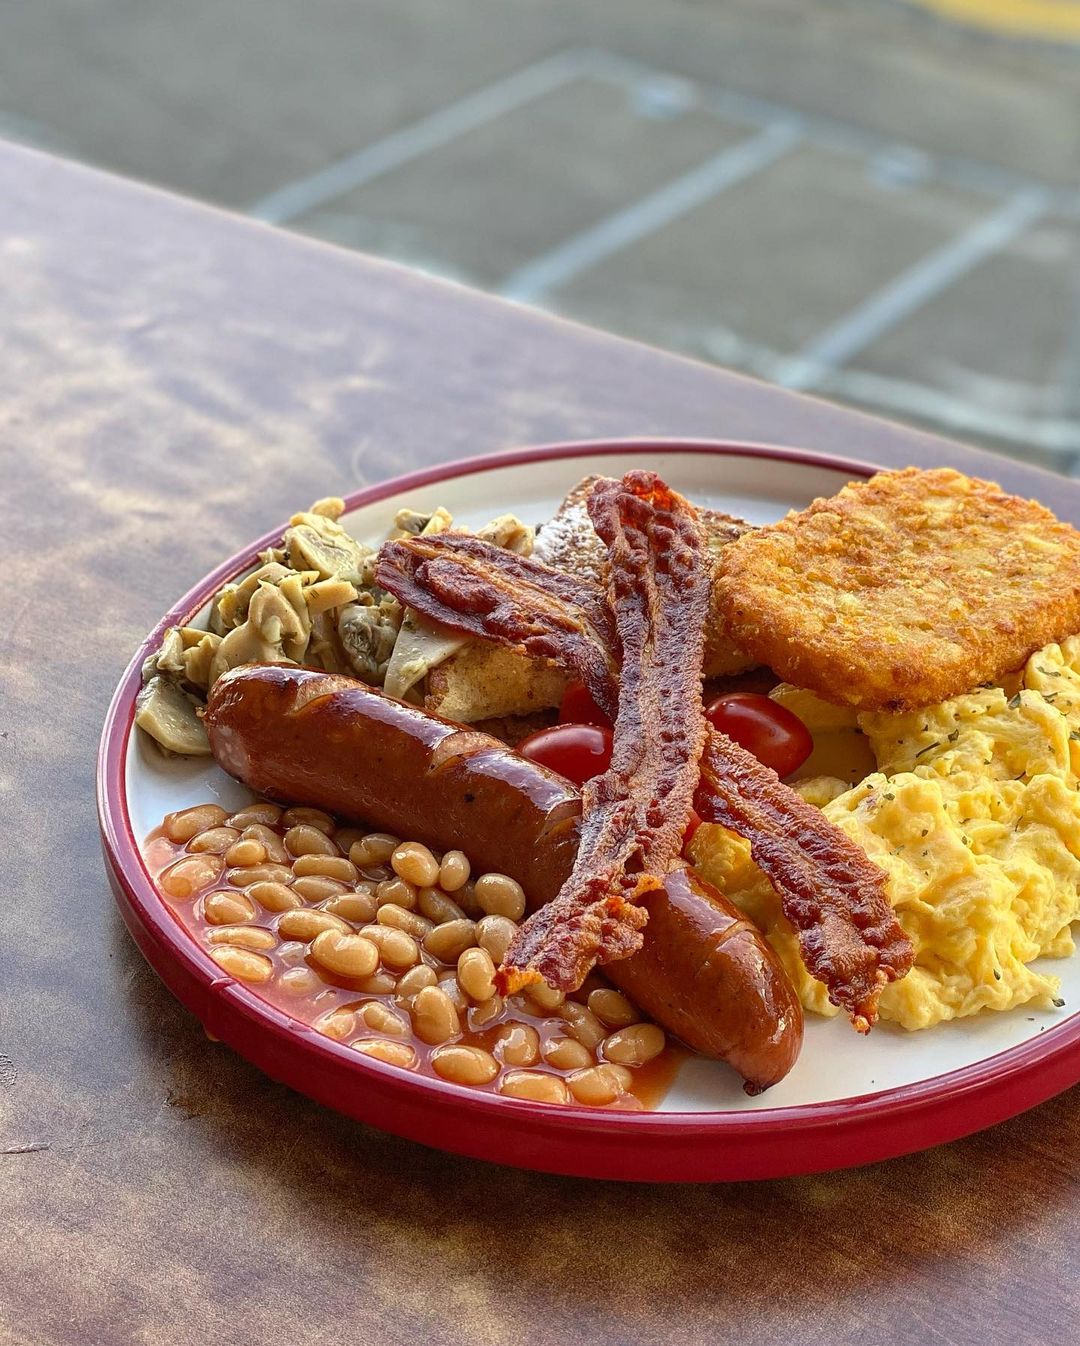 Breakfast-Club-tiong-bahru-plaza-breakfast-plate (3)